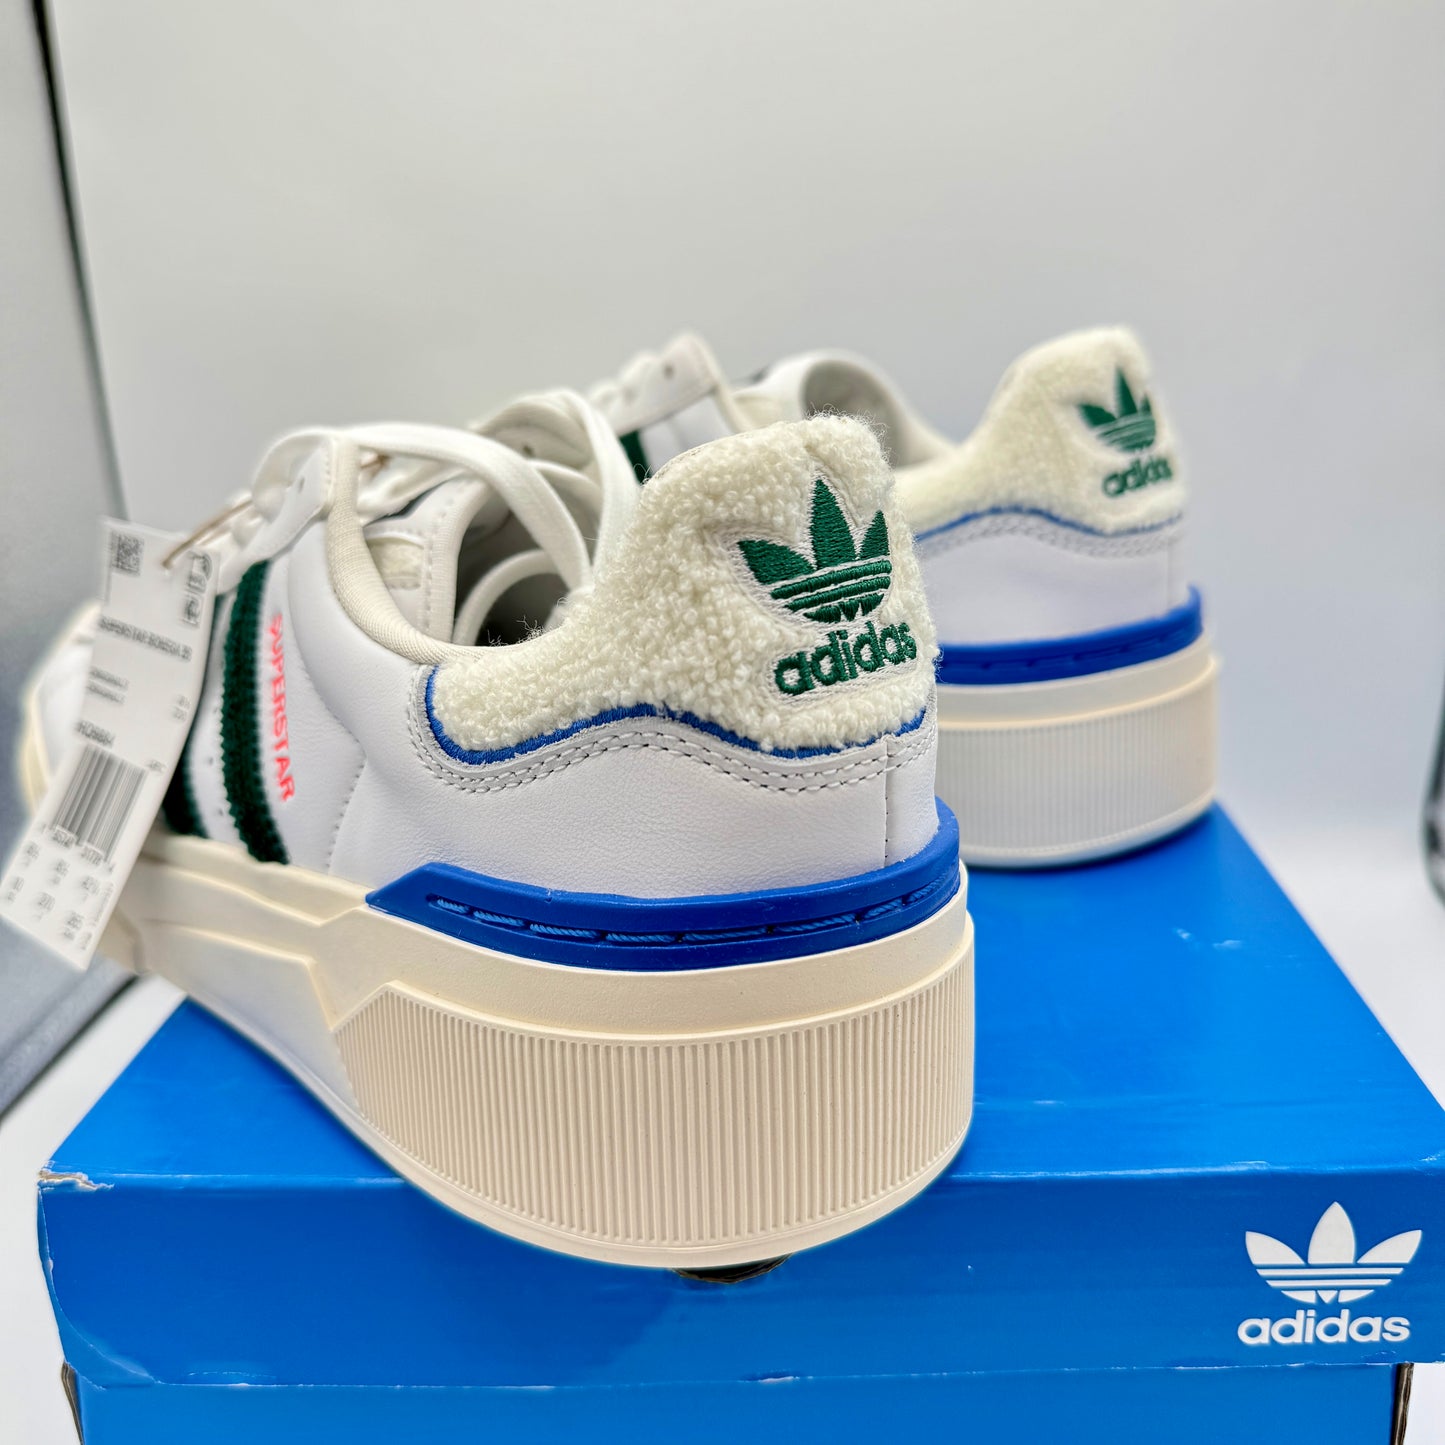 Adidas Stan Smith Bonega Platform Women’s Sneaker 2B sherpa heel white green